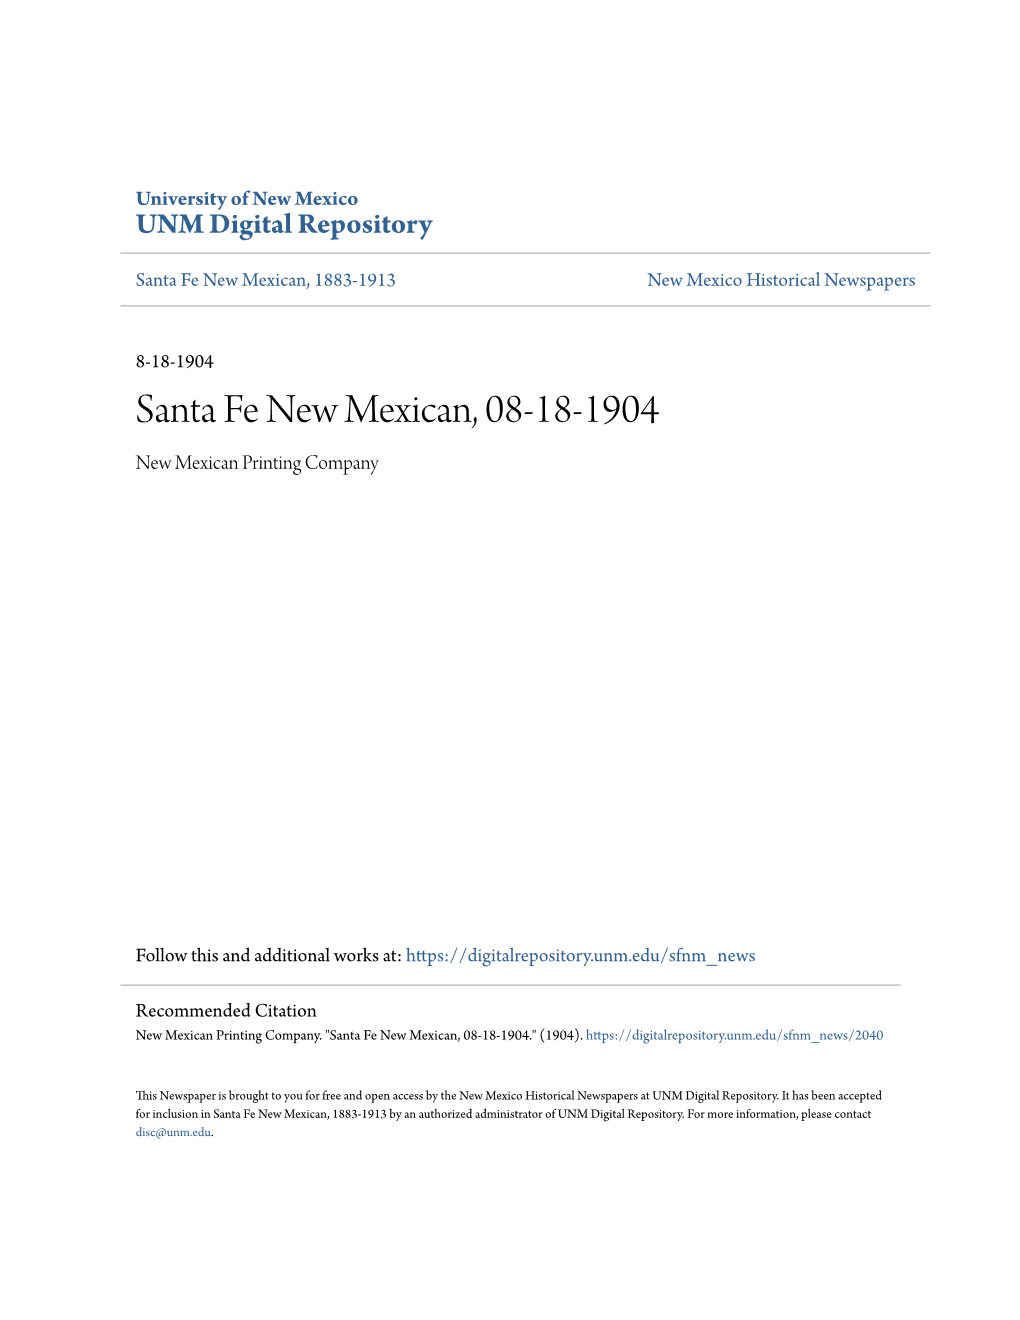 Santa Fe New Mexican, 08-18-1904 New Mexican Printing Company